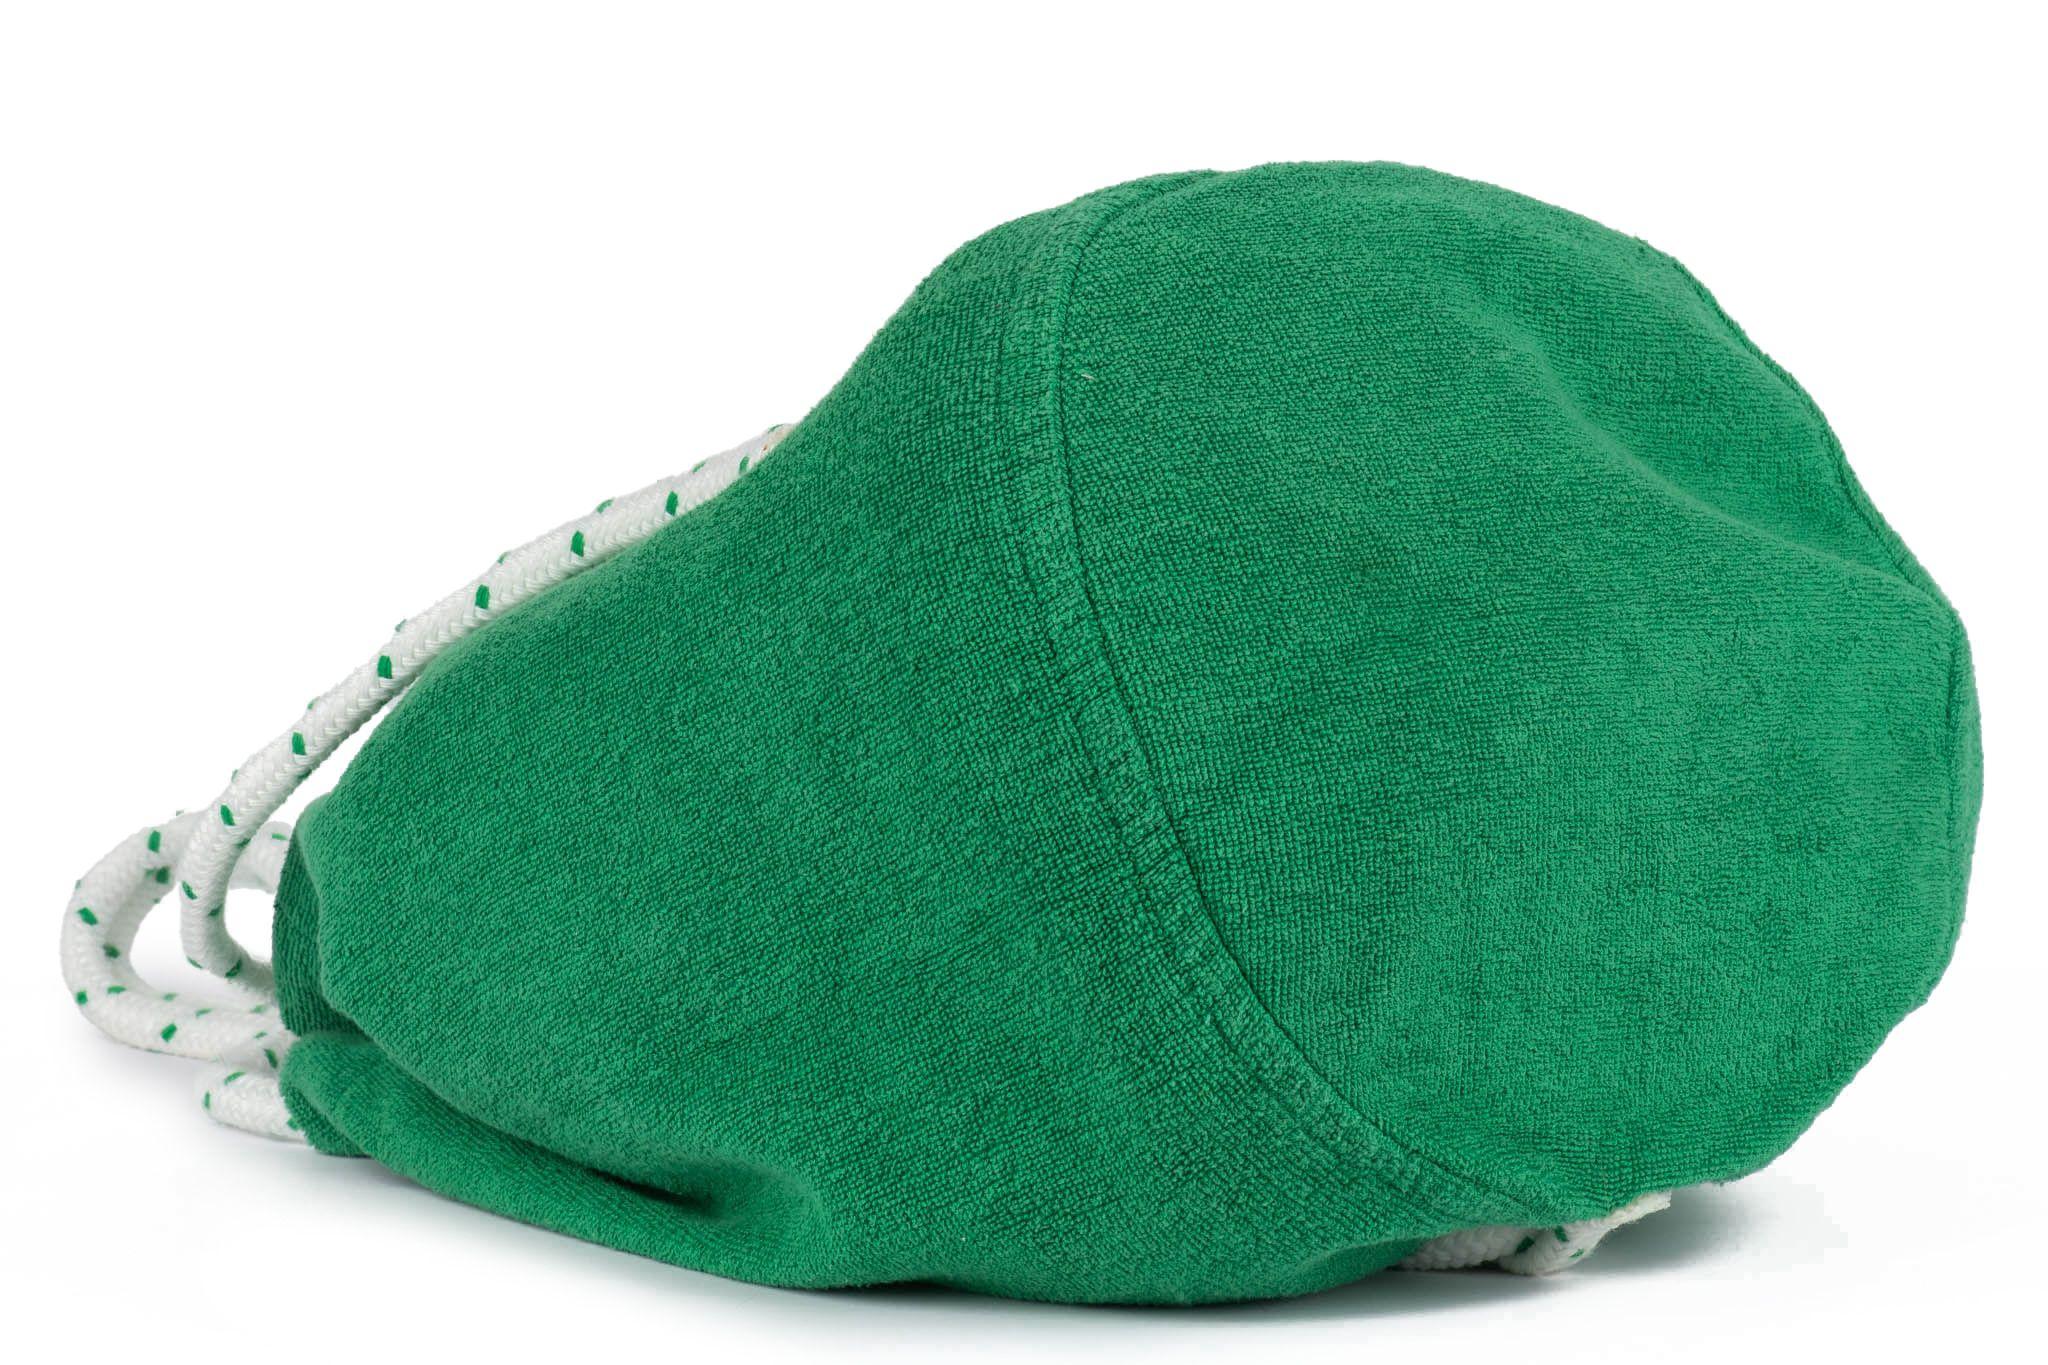 Hermès Green Golf Terry Cloth Beach Bag 3